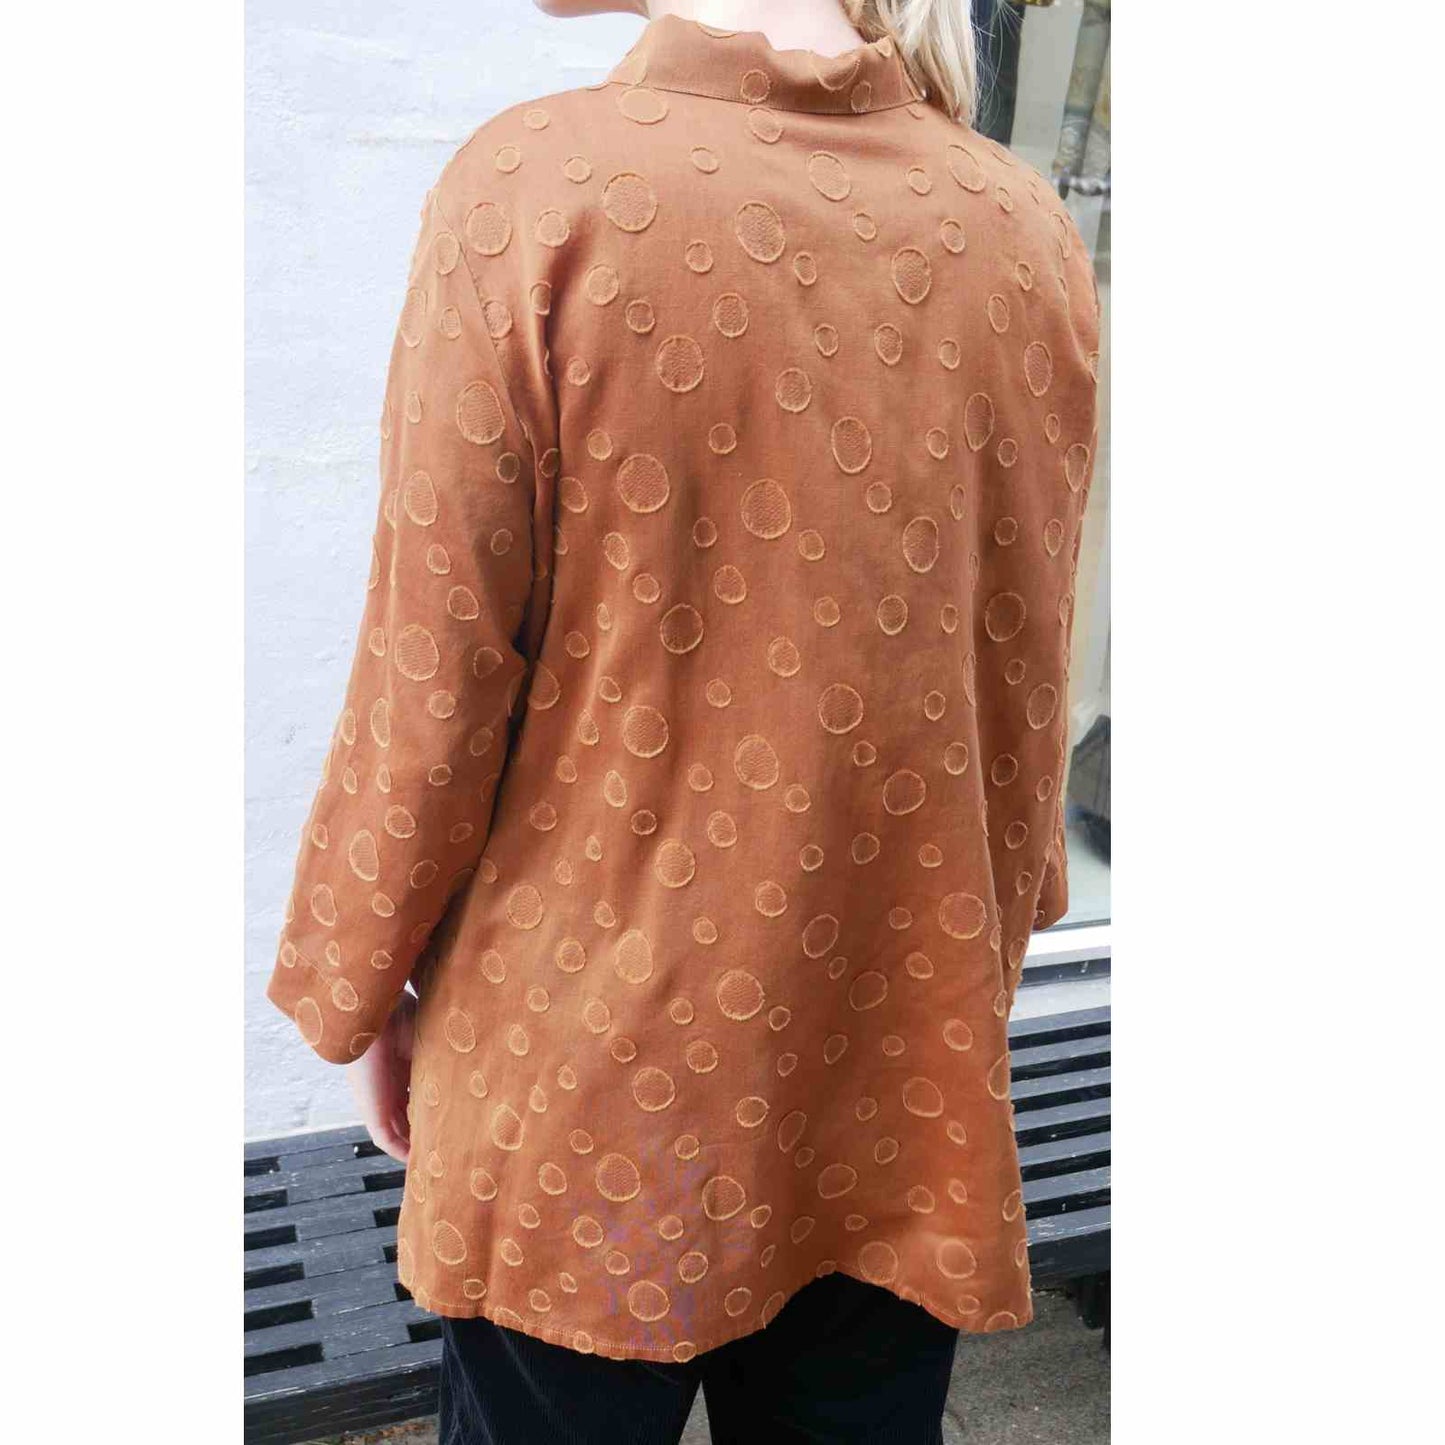 Grizas skjorte i rust bagfra